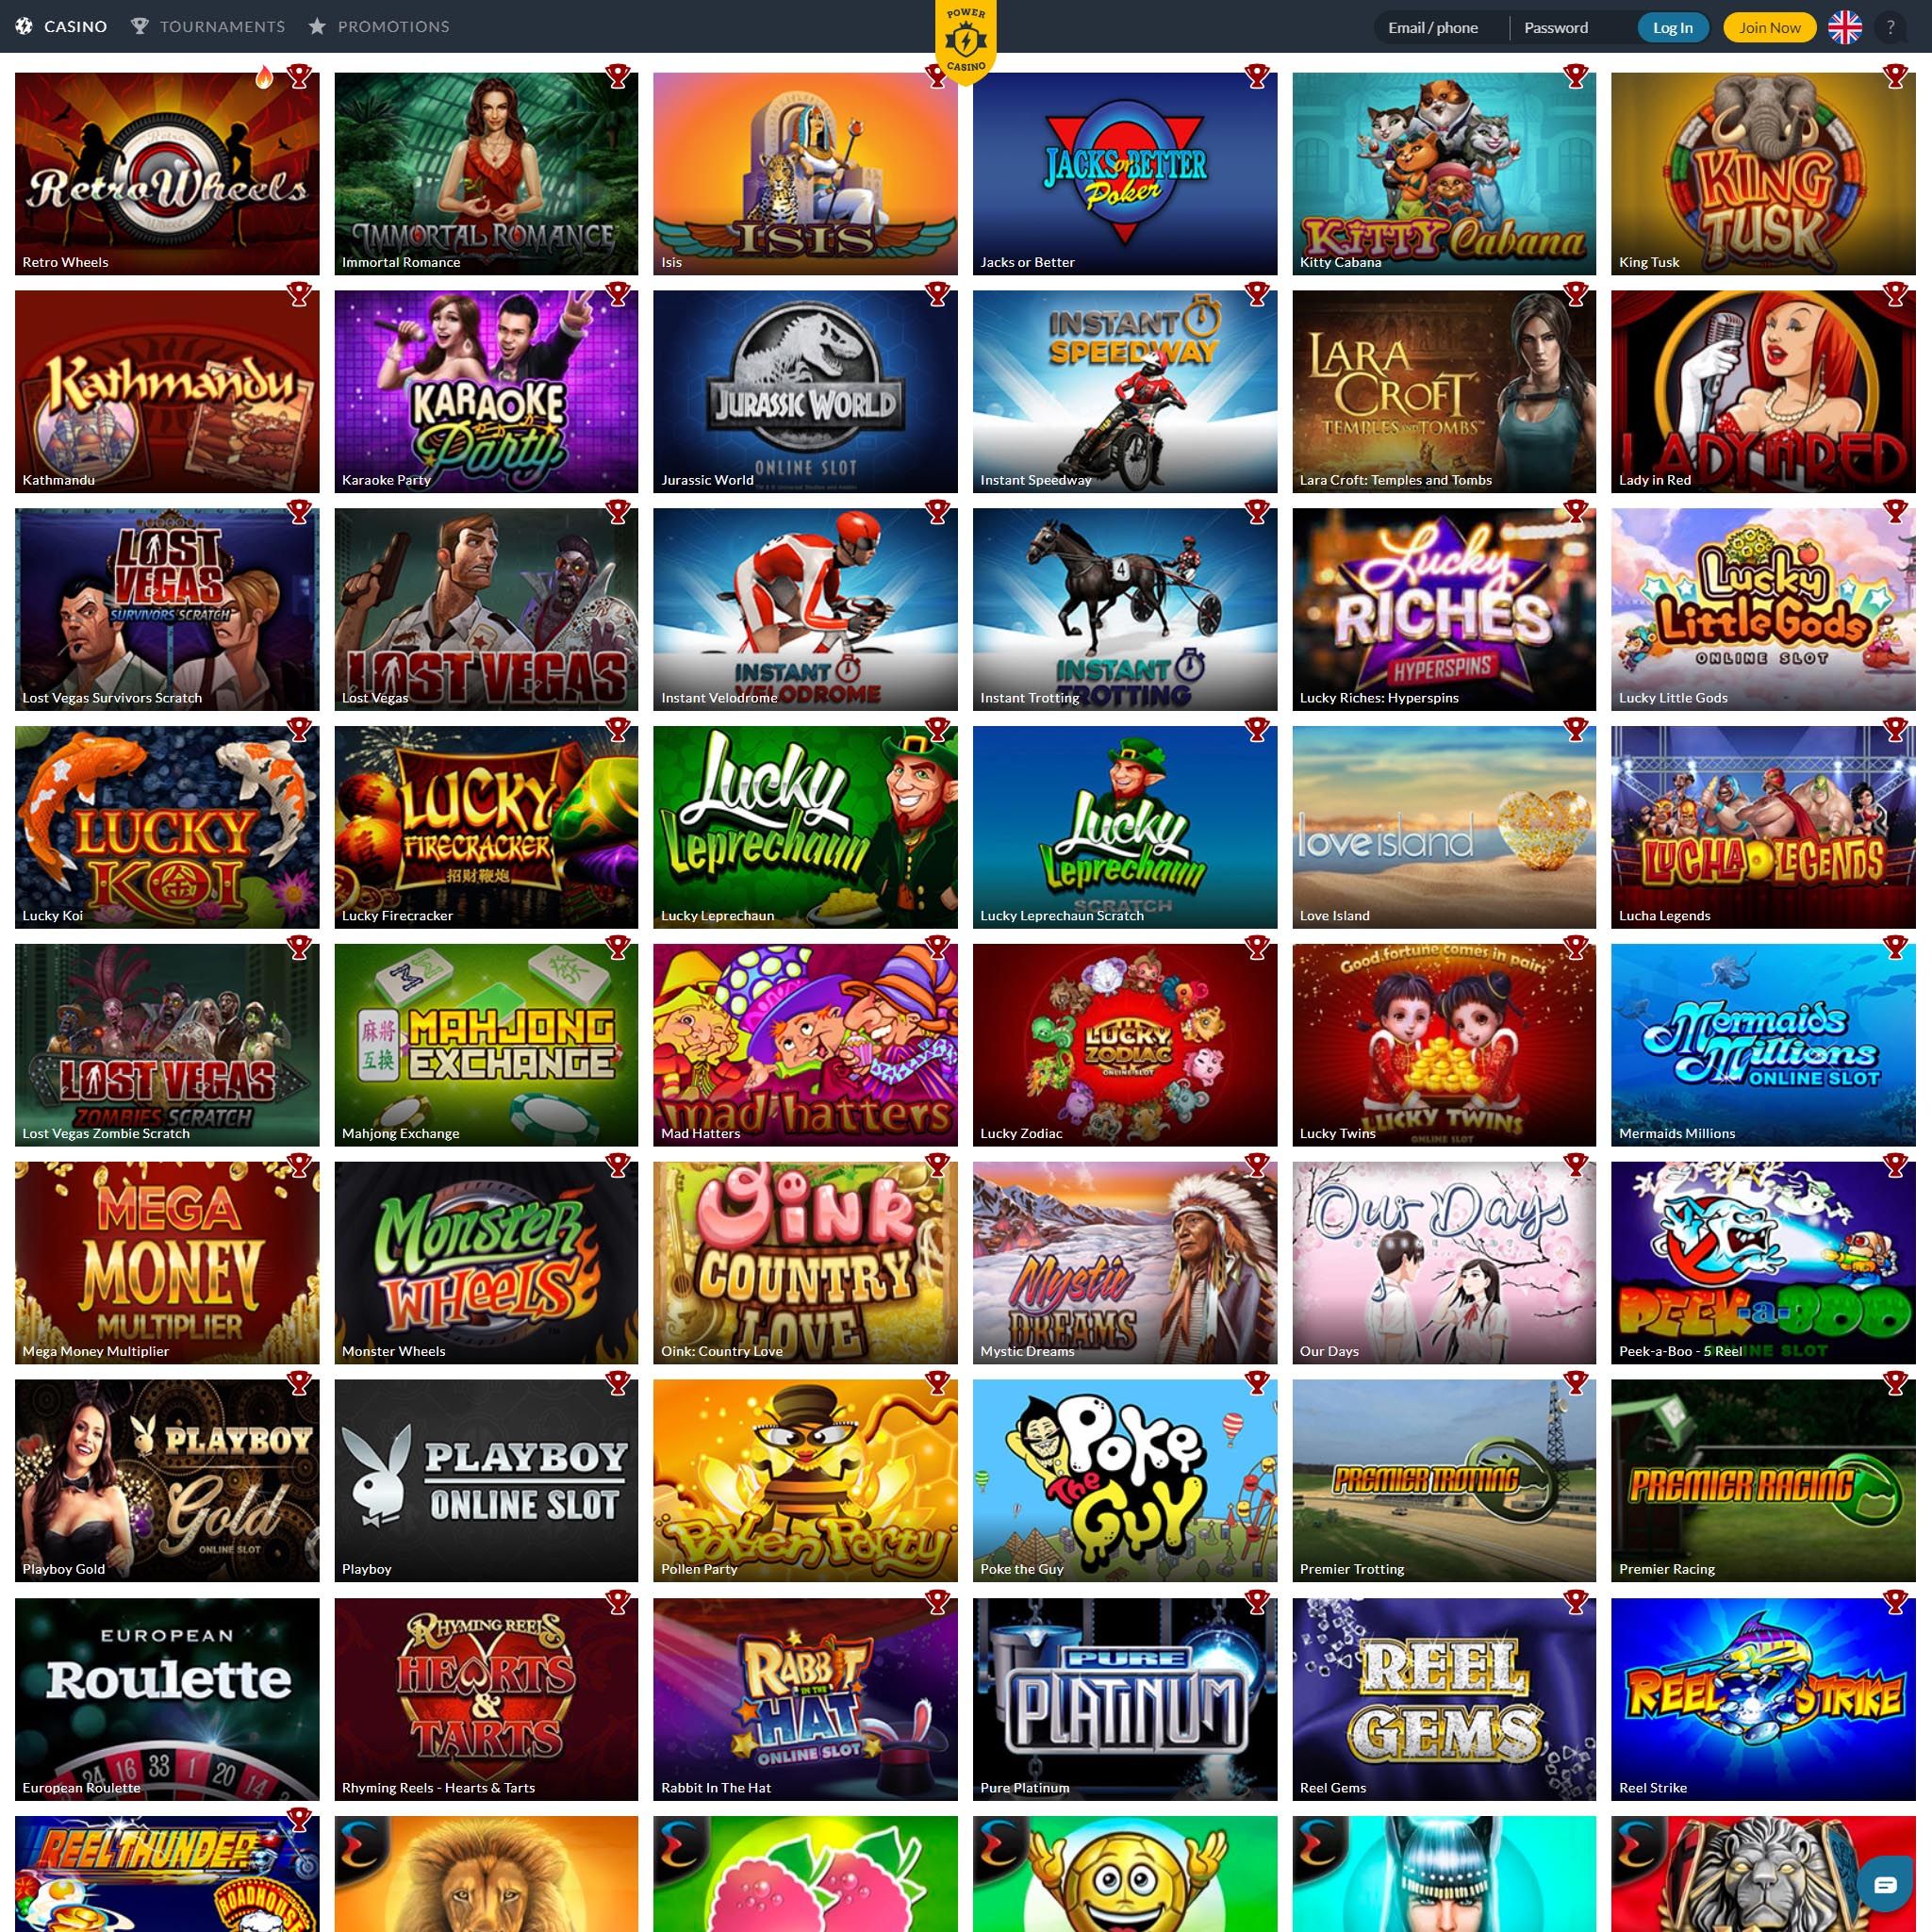 Power Casino full games catalogue